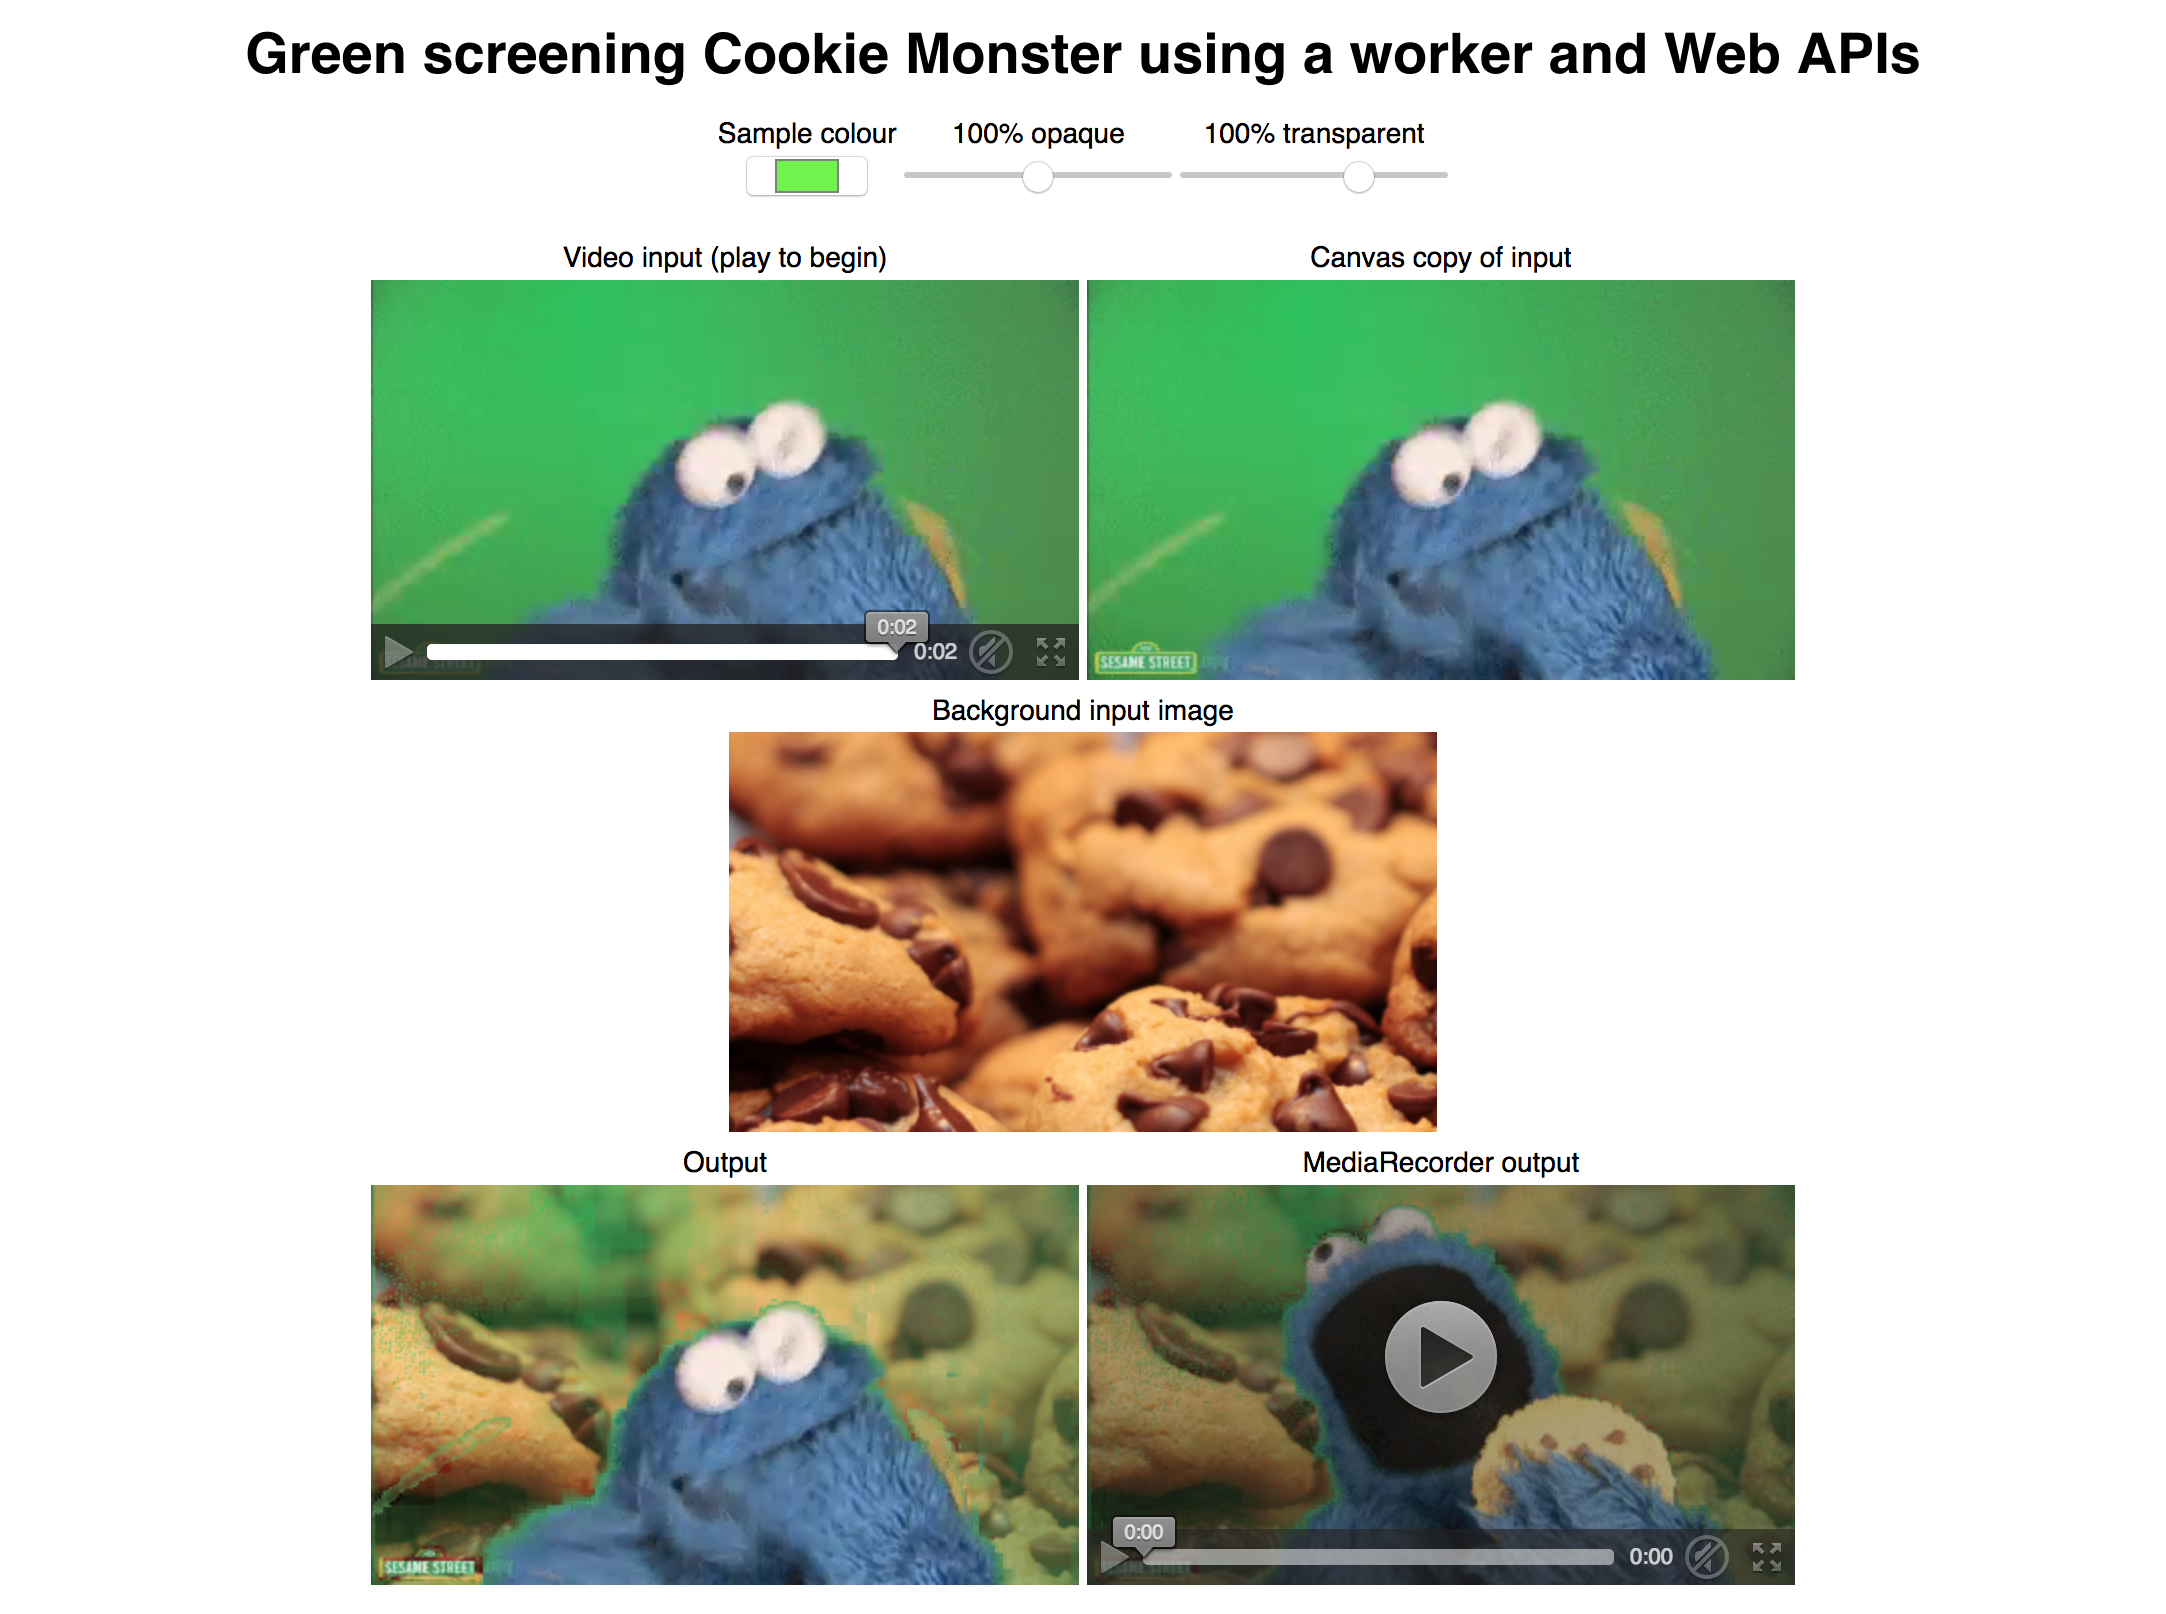 Greenscreening cookie monster